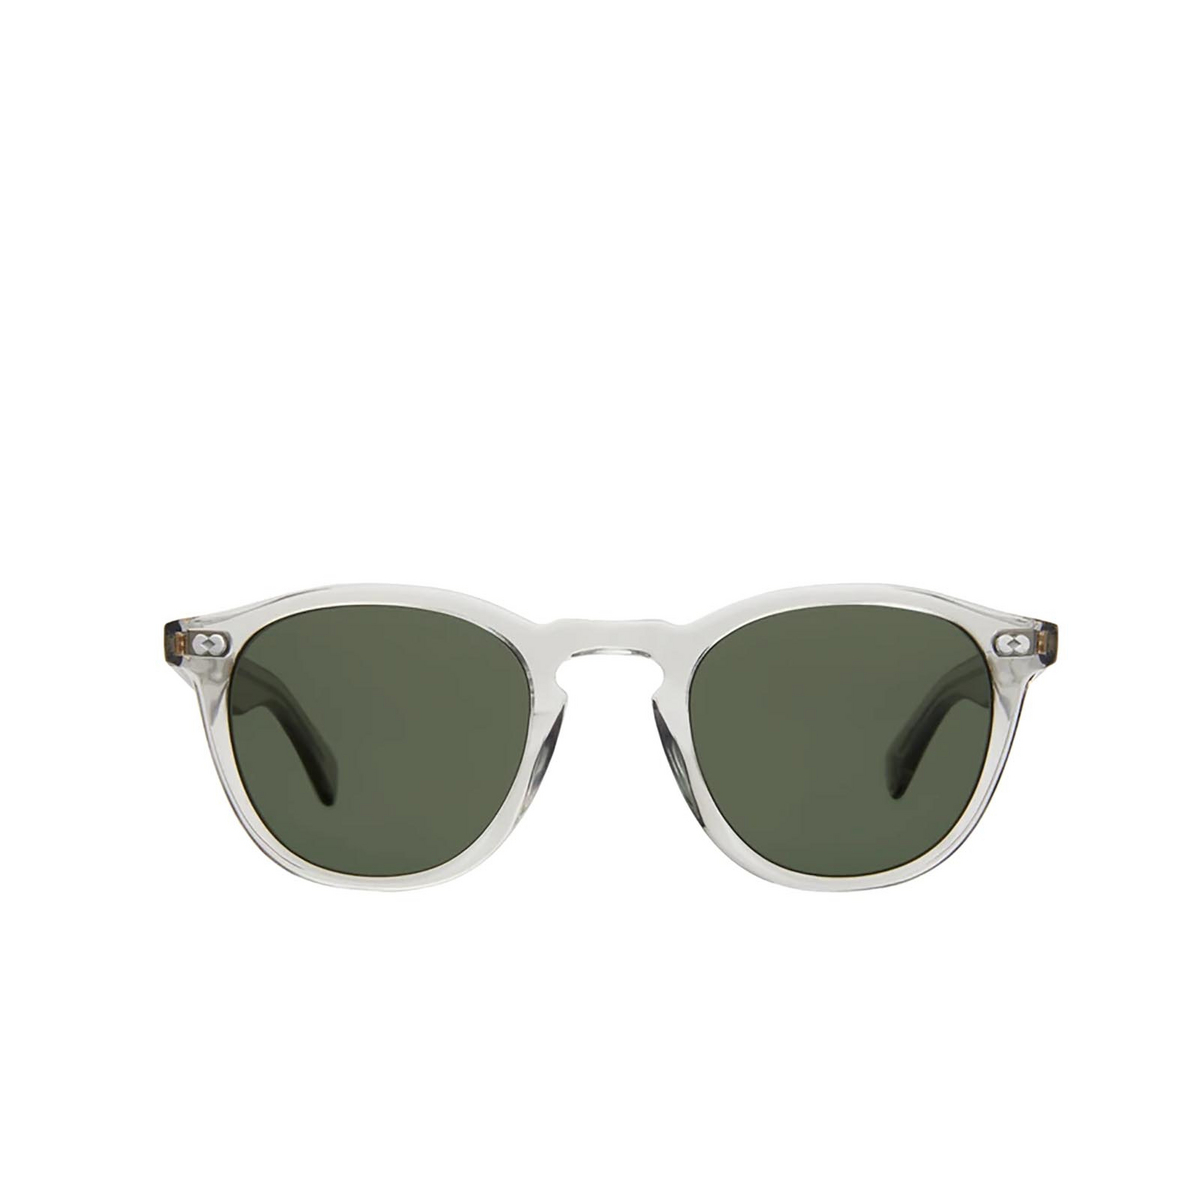 Garrett Leight® Square Sunglasses: Hampton X Sun color Llg LLG/PG15 - front view.